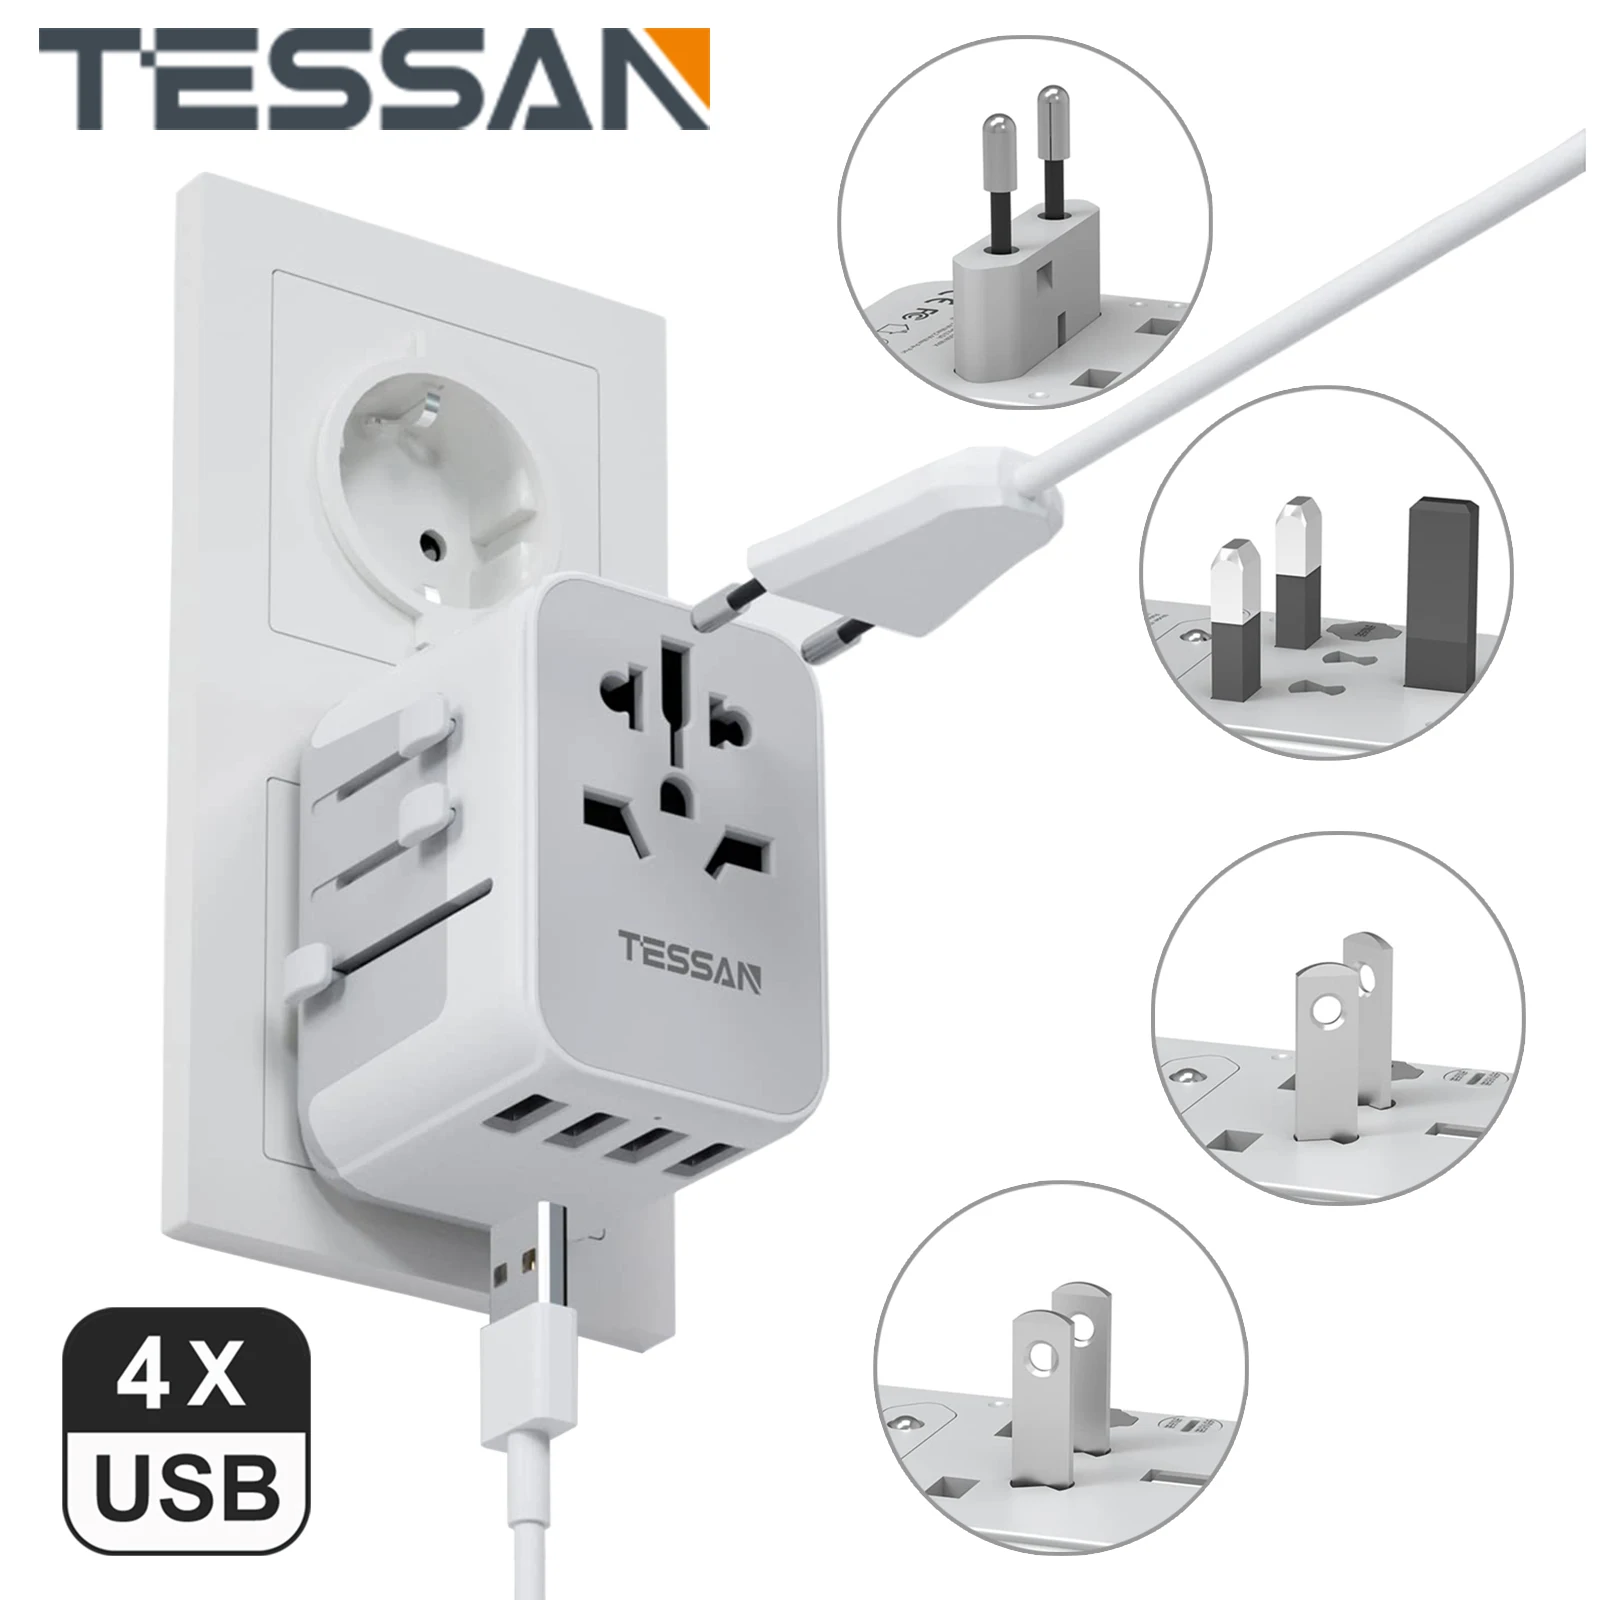 

TESSAN Universal Travel Plug Adapter with 4 USB Ports(3.4A) and 1 AC Plug(2300W), Worldwide Wall Charger for UK/EU/AU/US